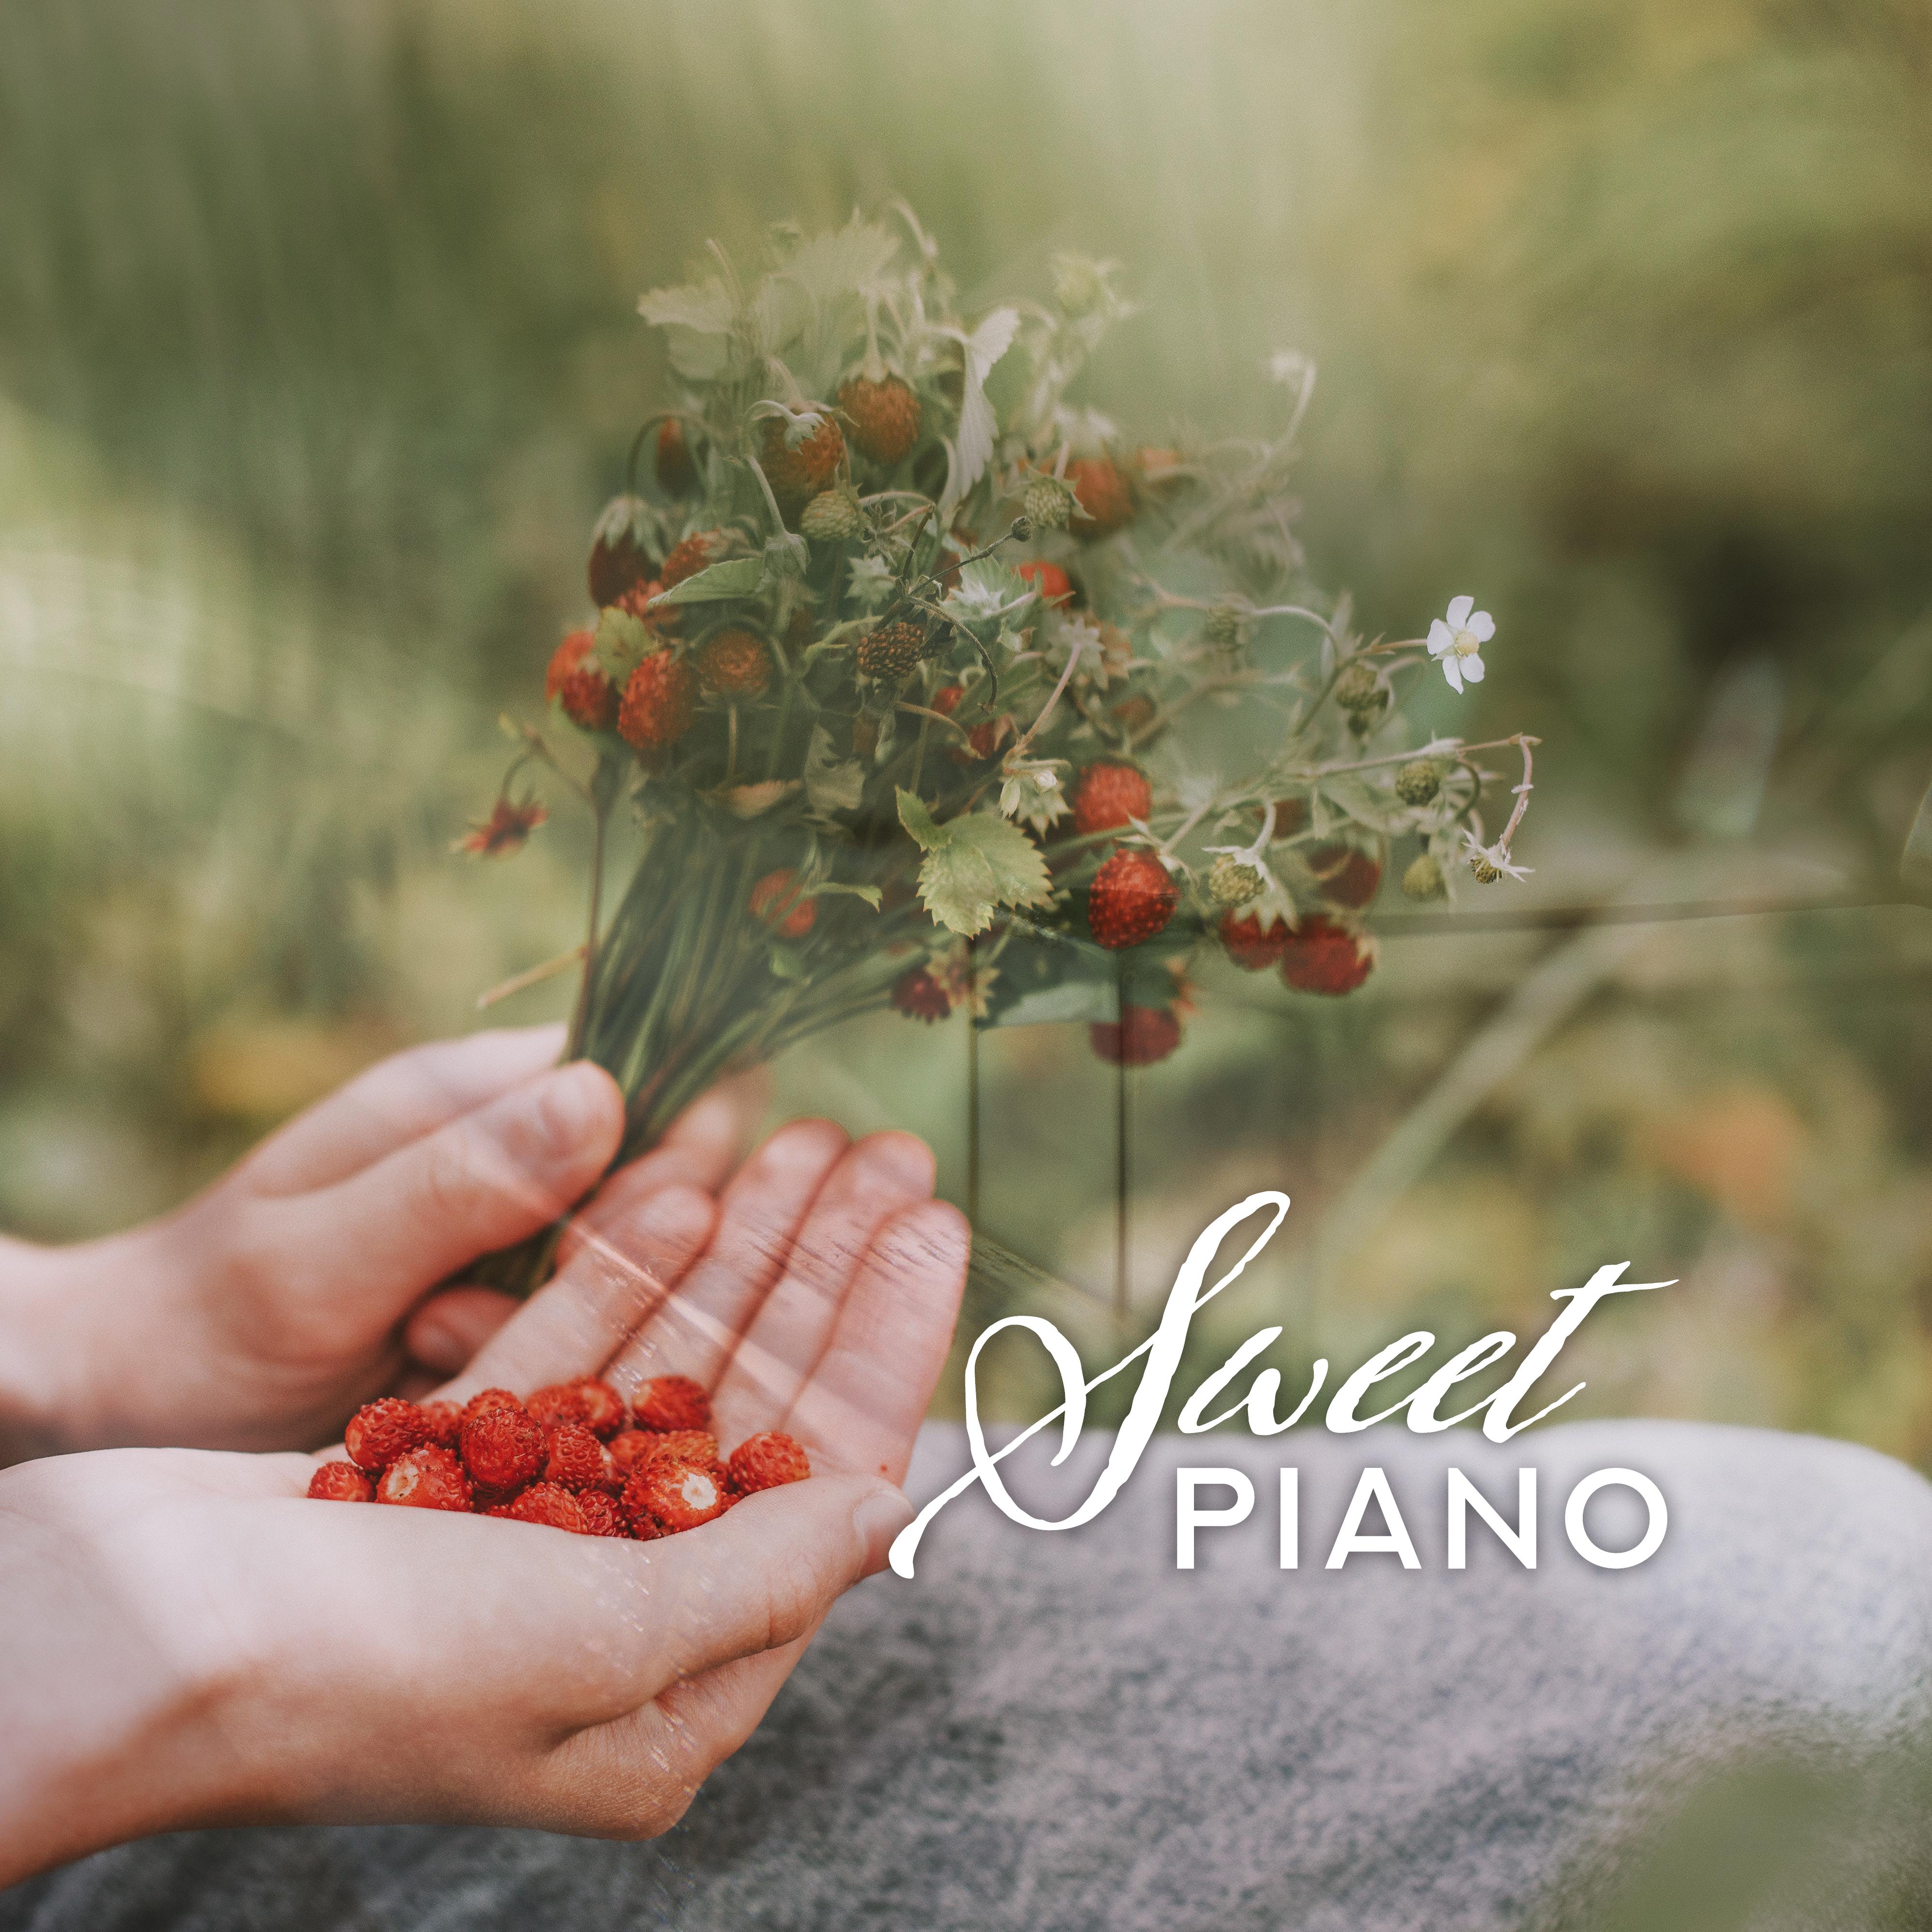 Sweet Piano: Instrumental Jazz Music Ambient 2019